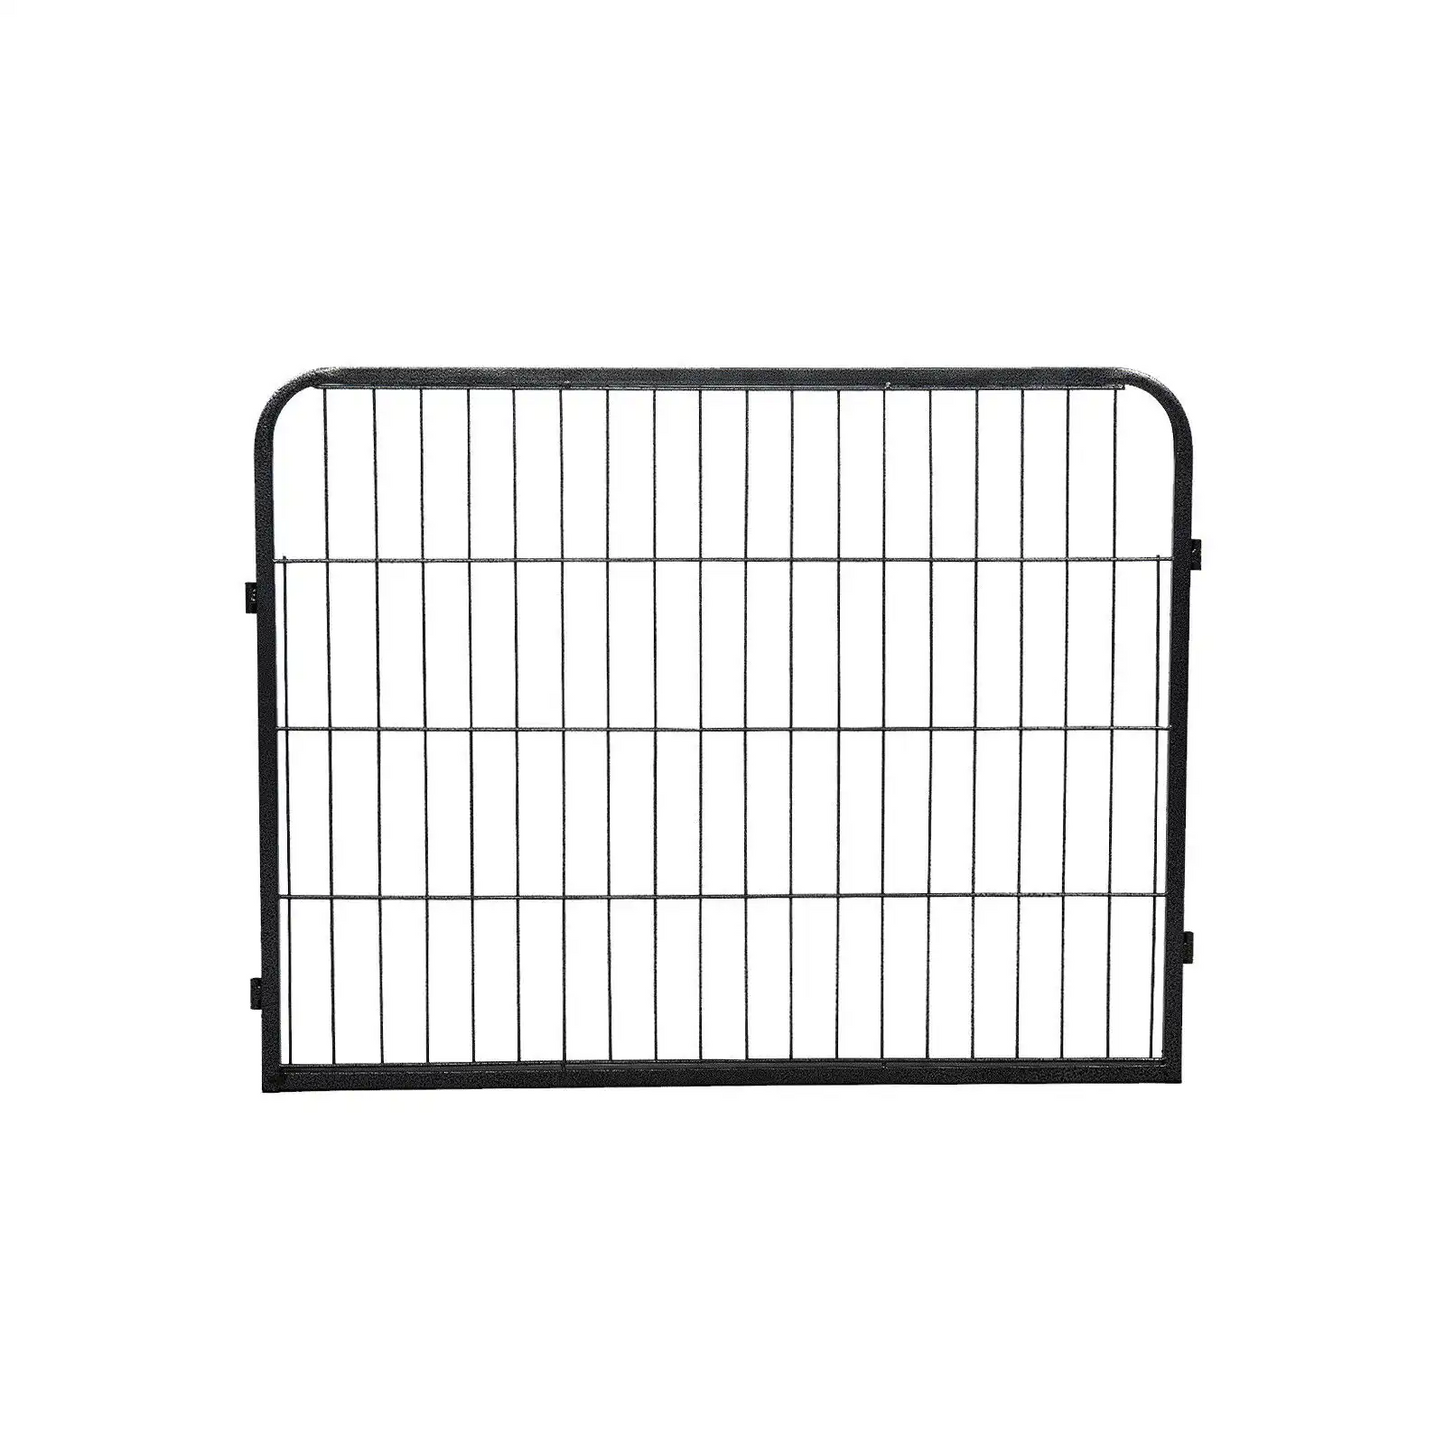 24" Height Pet Playpen Metal Portable Fence - 8 Panel